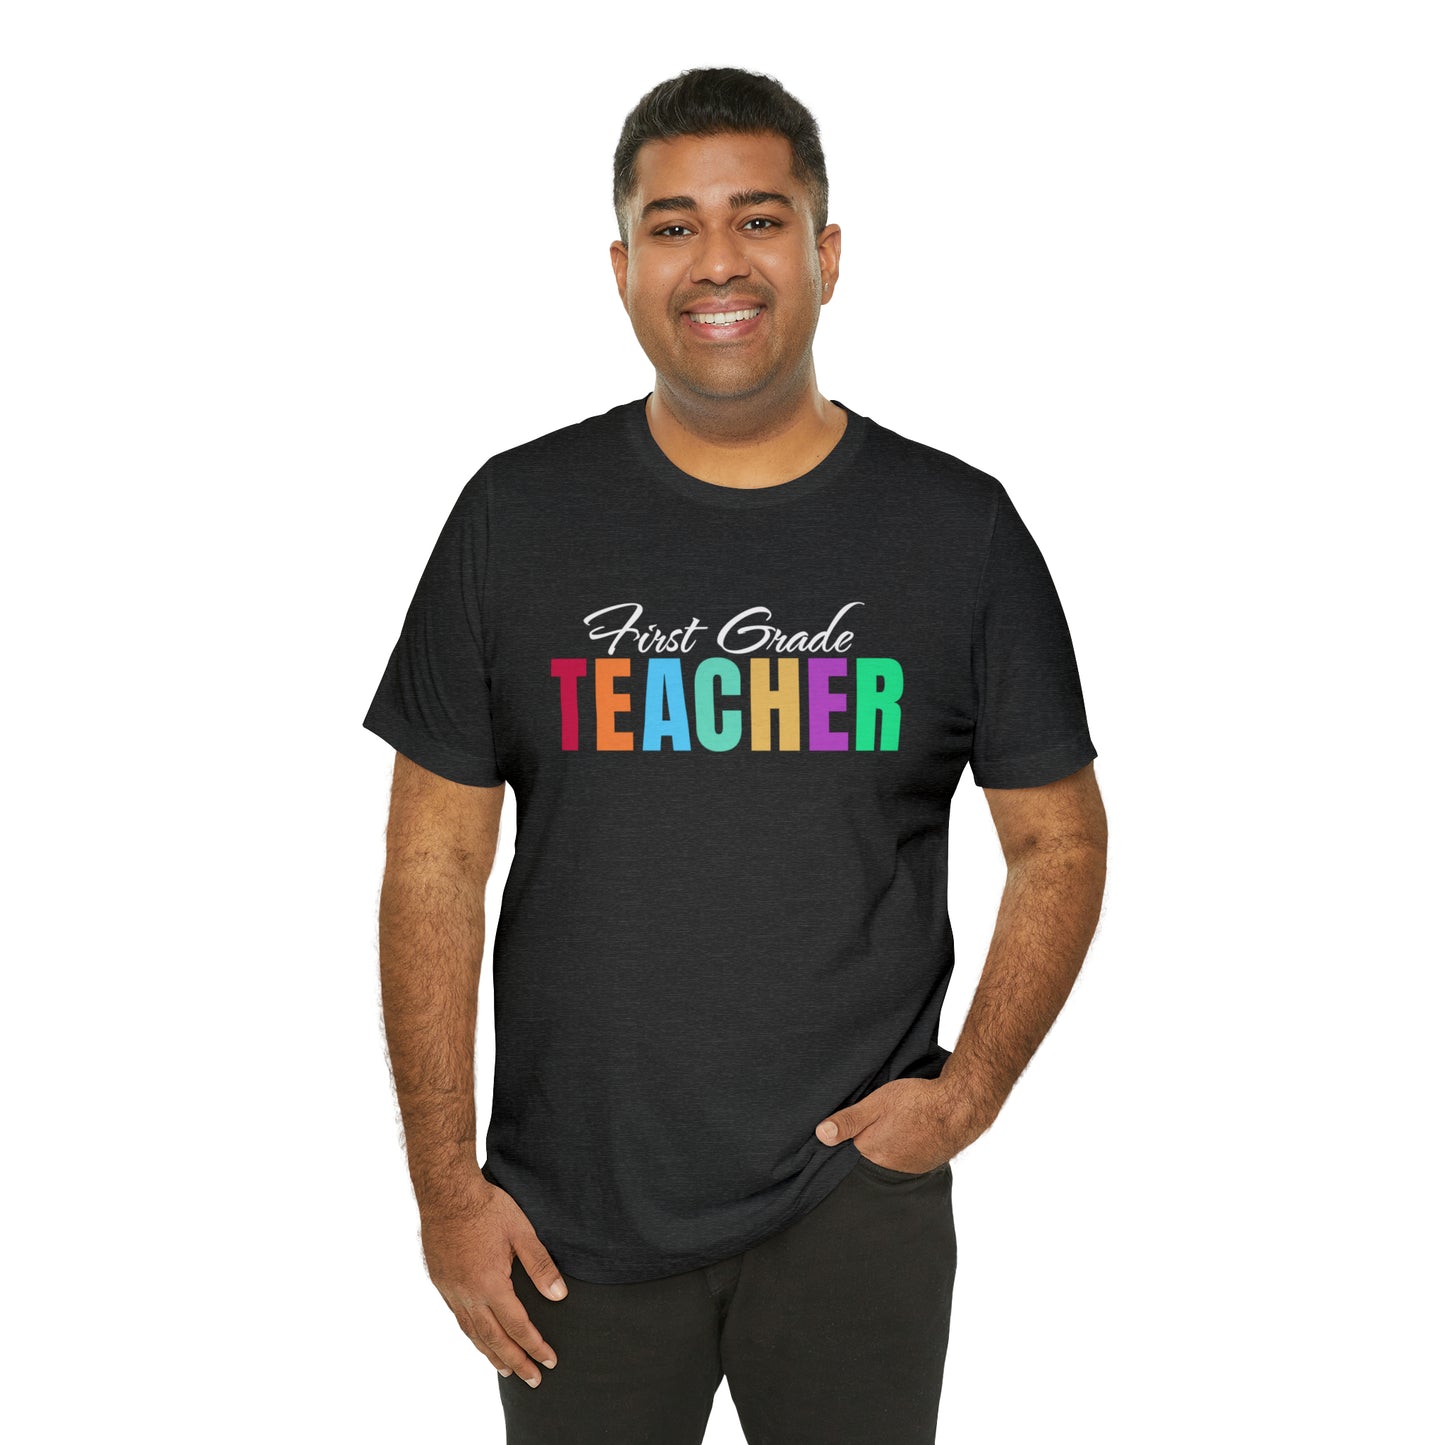 First grade teacher shirt Custom Elementary School Teacher Tshirt unique Personalized Gift for Educators and Classroom Assistant teacher tee